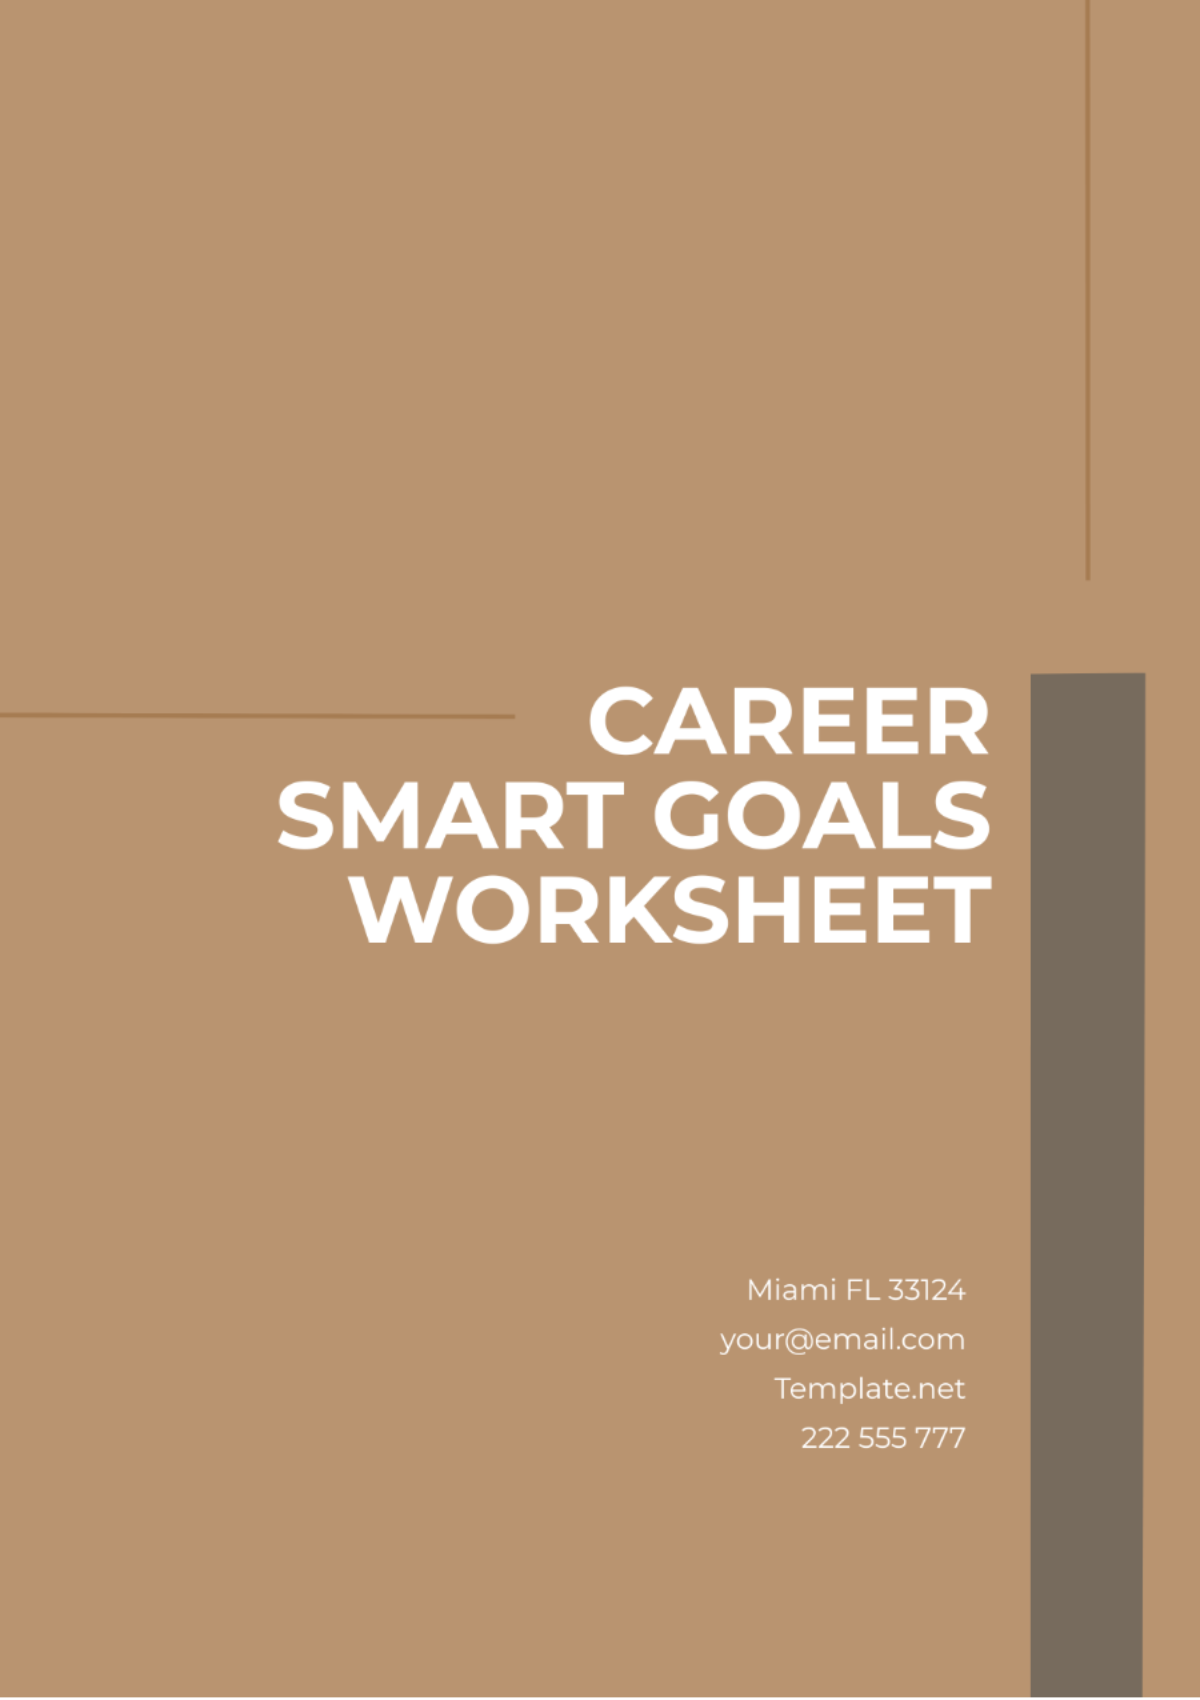 Career SMART Goals Worksheet Template